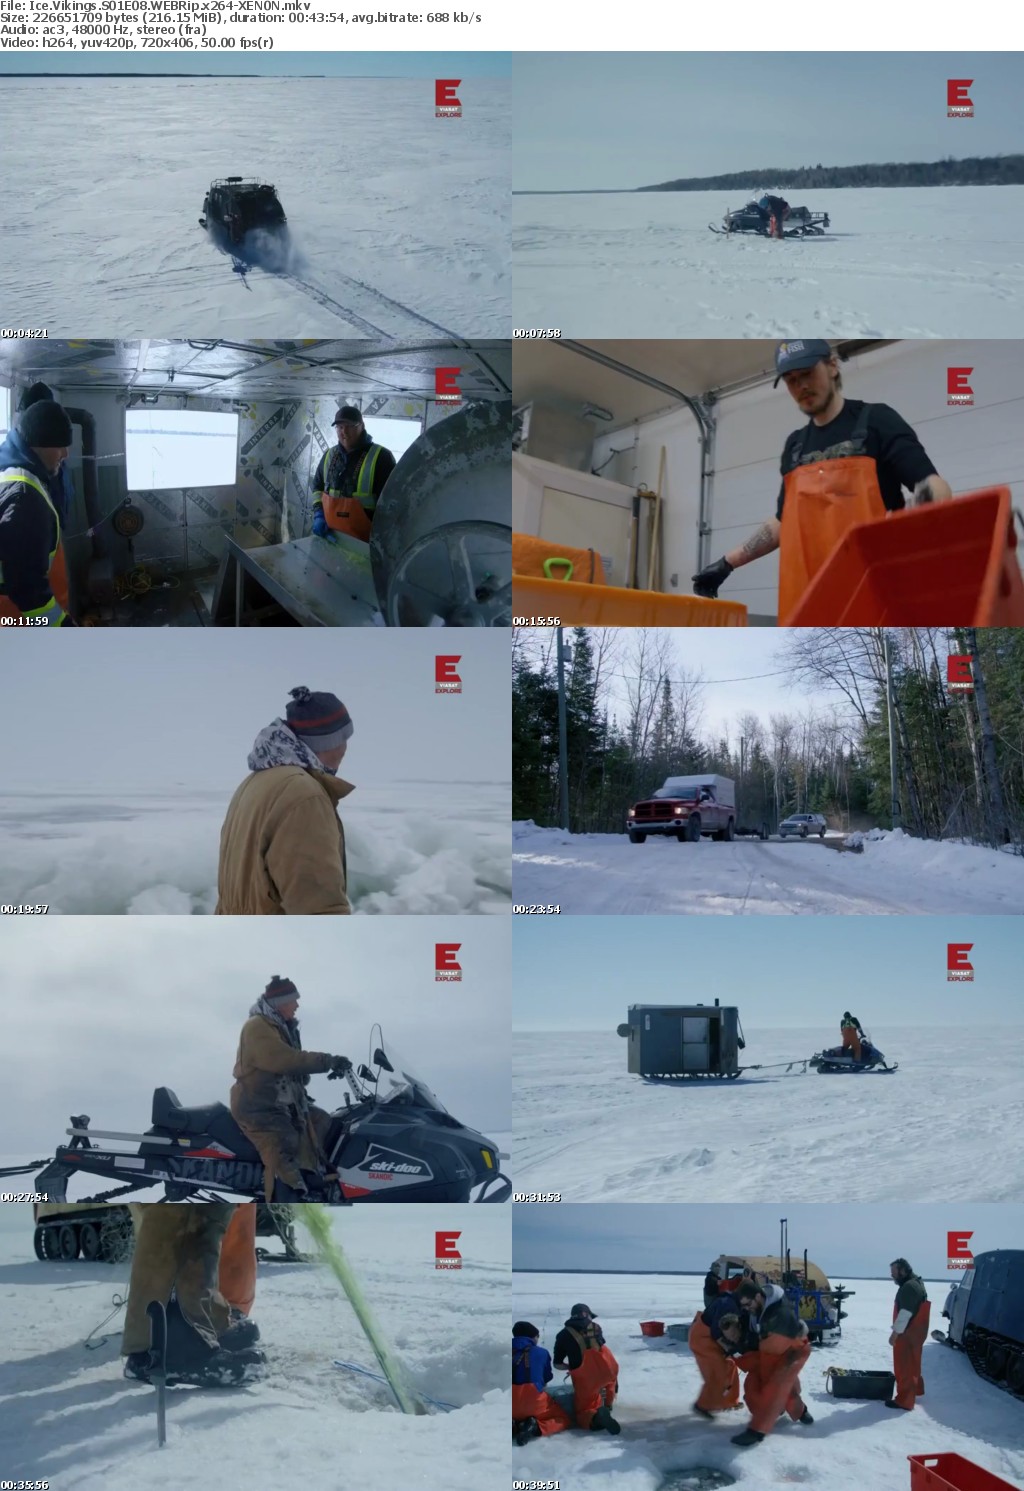 Ice Vikings S01E08 WEBRip x264-XEN0N